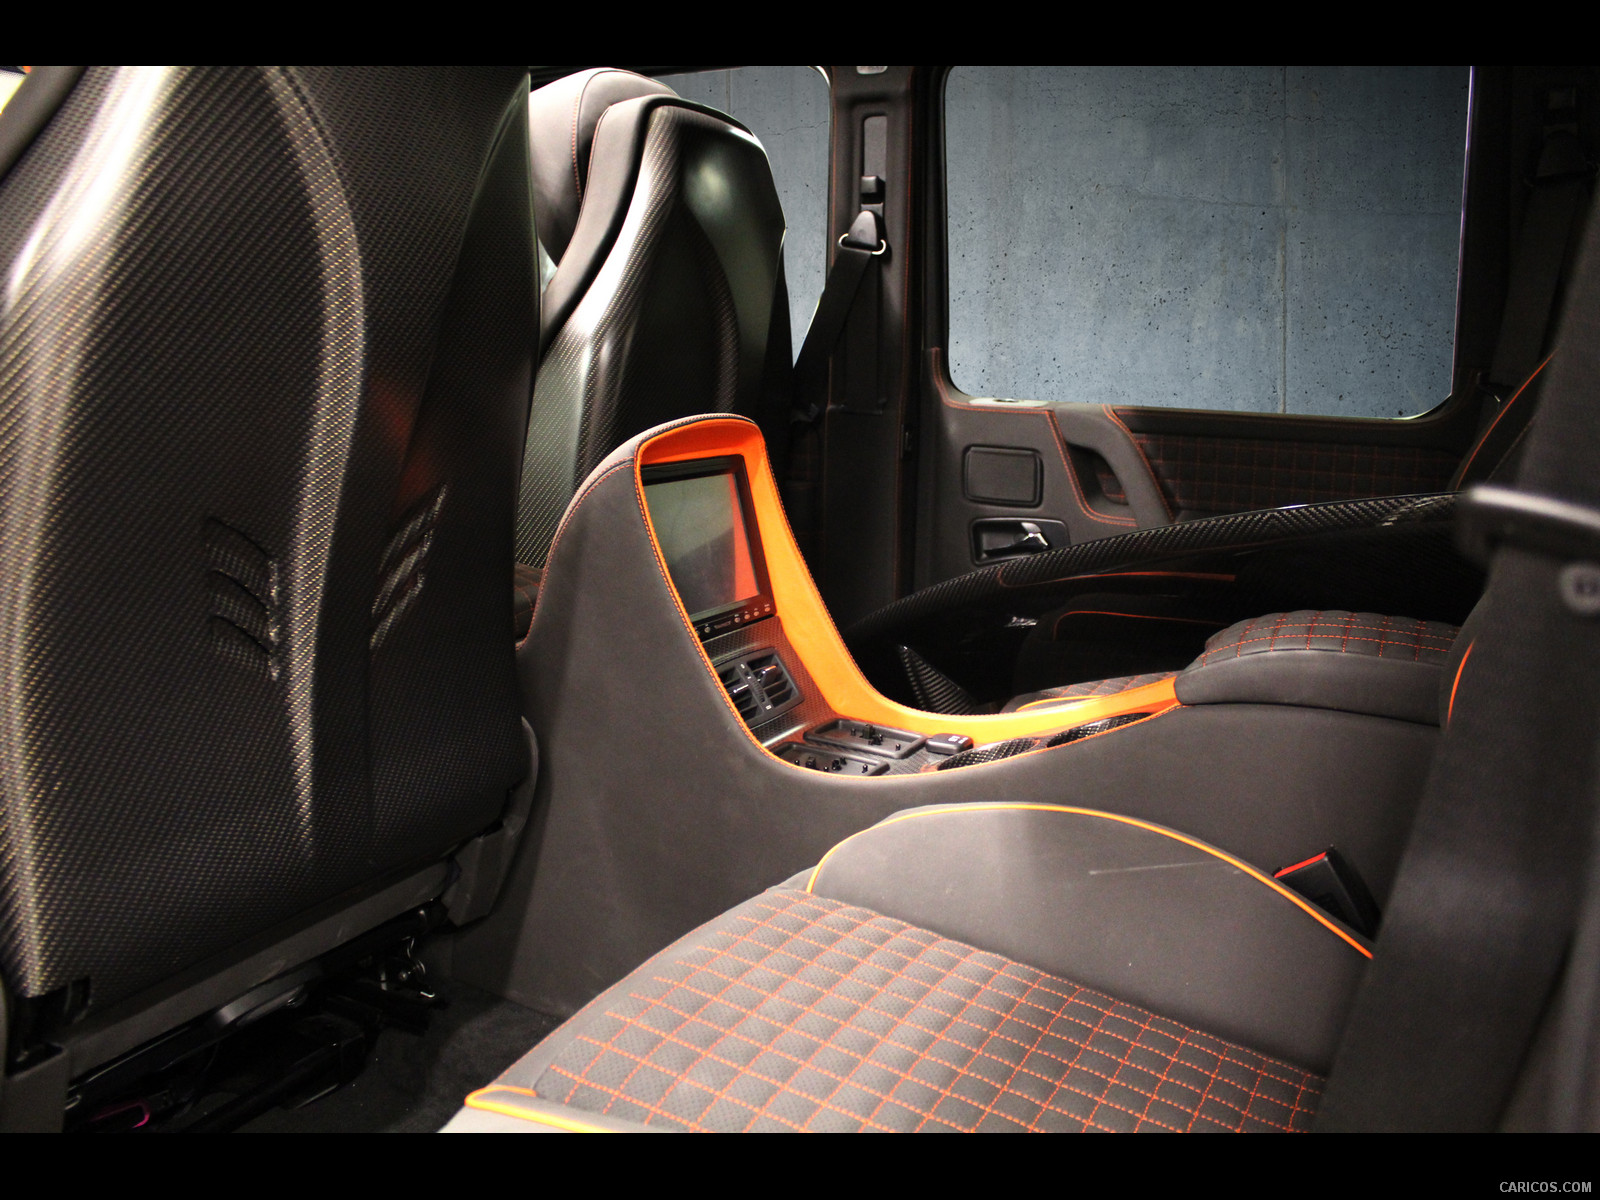 2011 Mansory Mercedes-Benz G-Class  - Interior Rear Seats, #3 of 4